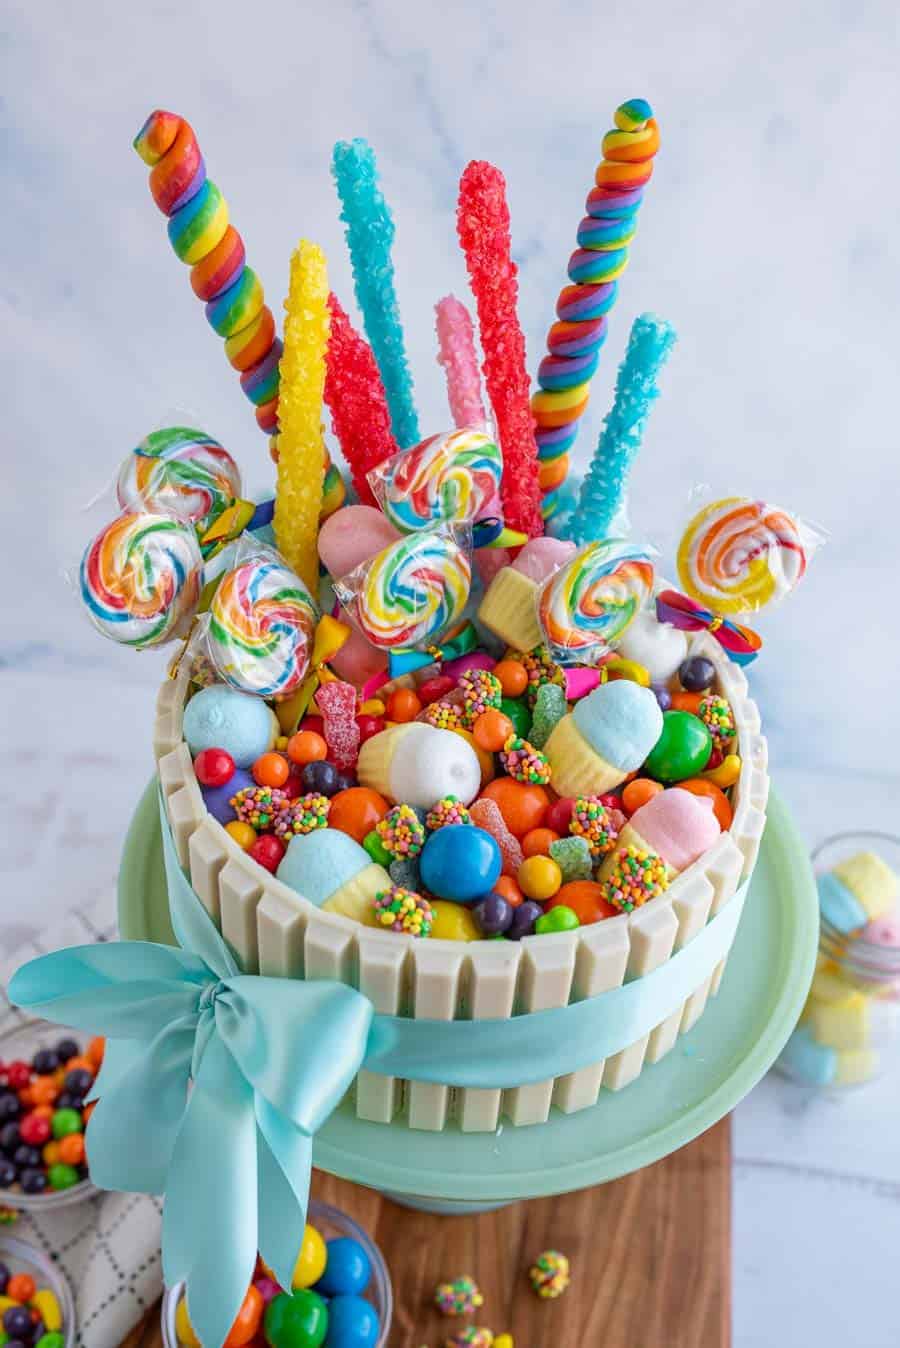 How to Make Candy Birthday Cakes - Delishably